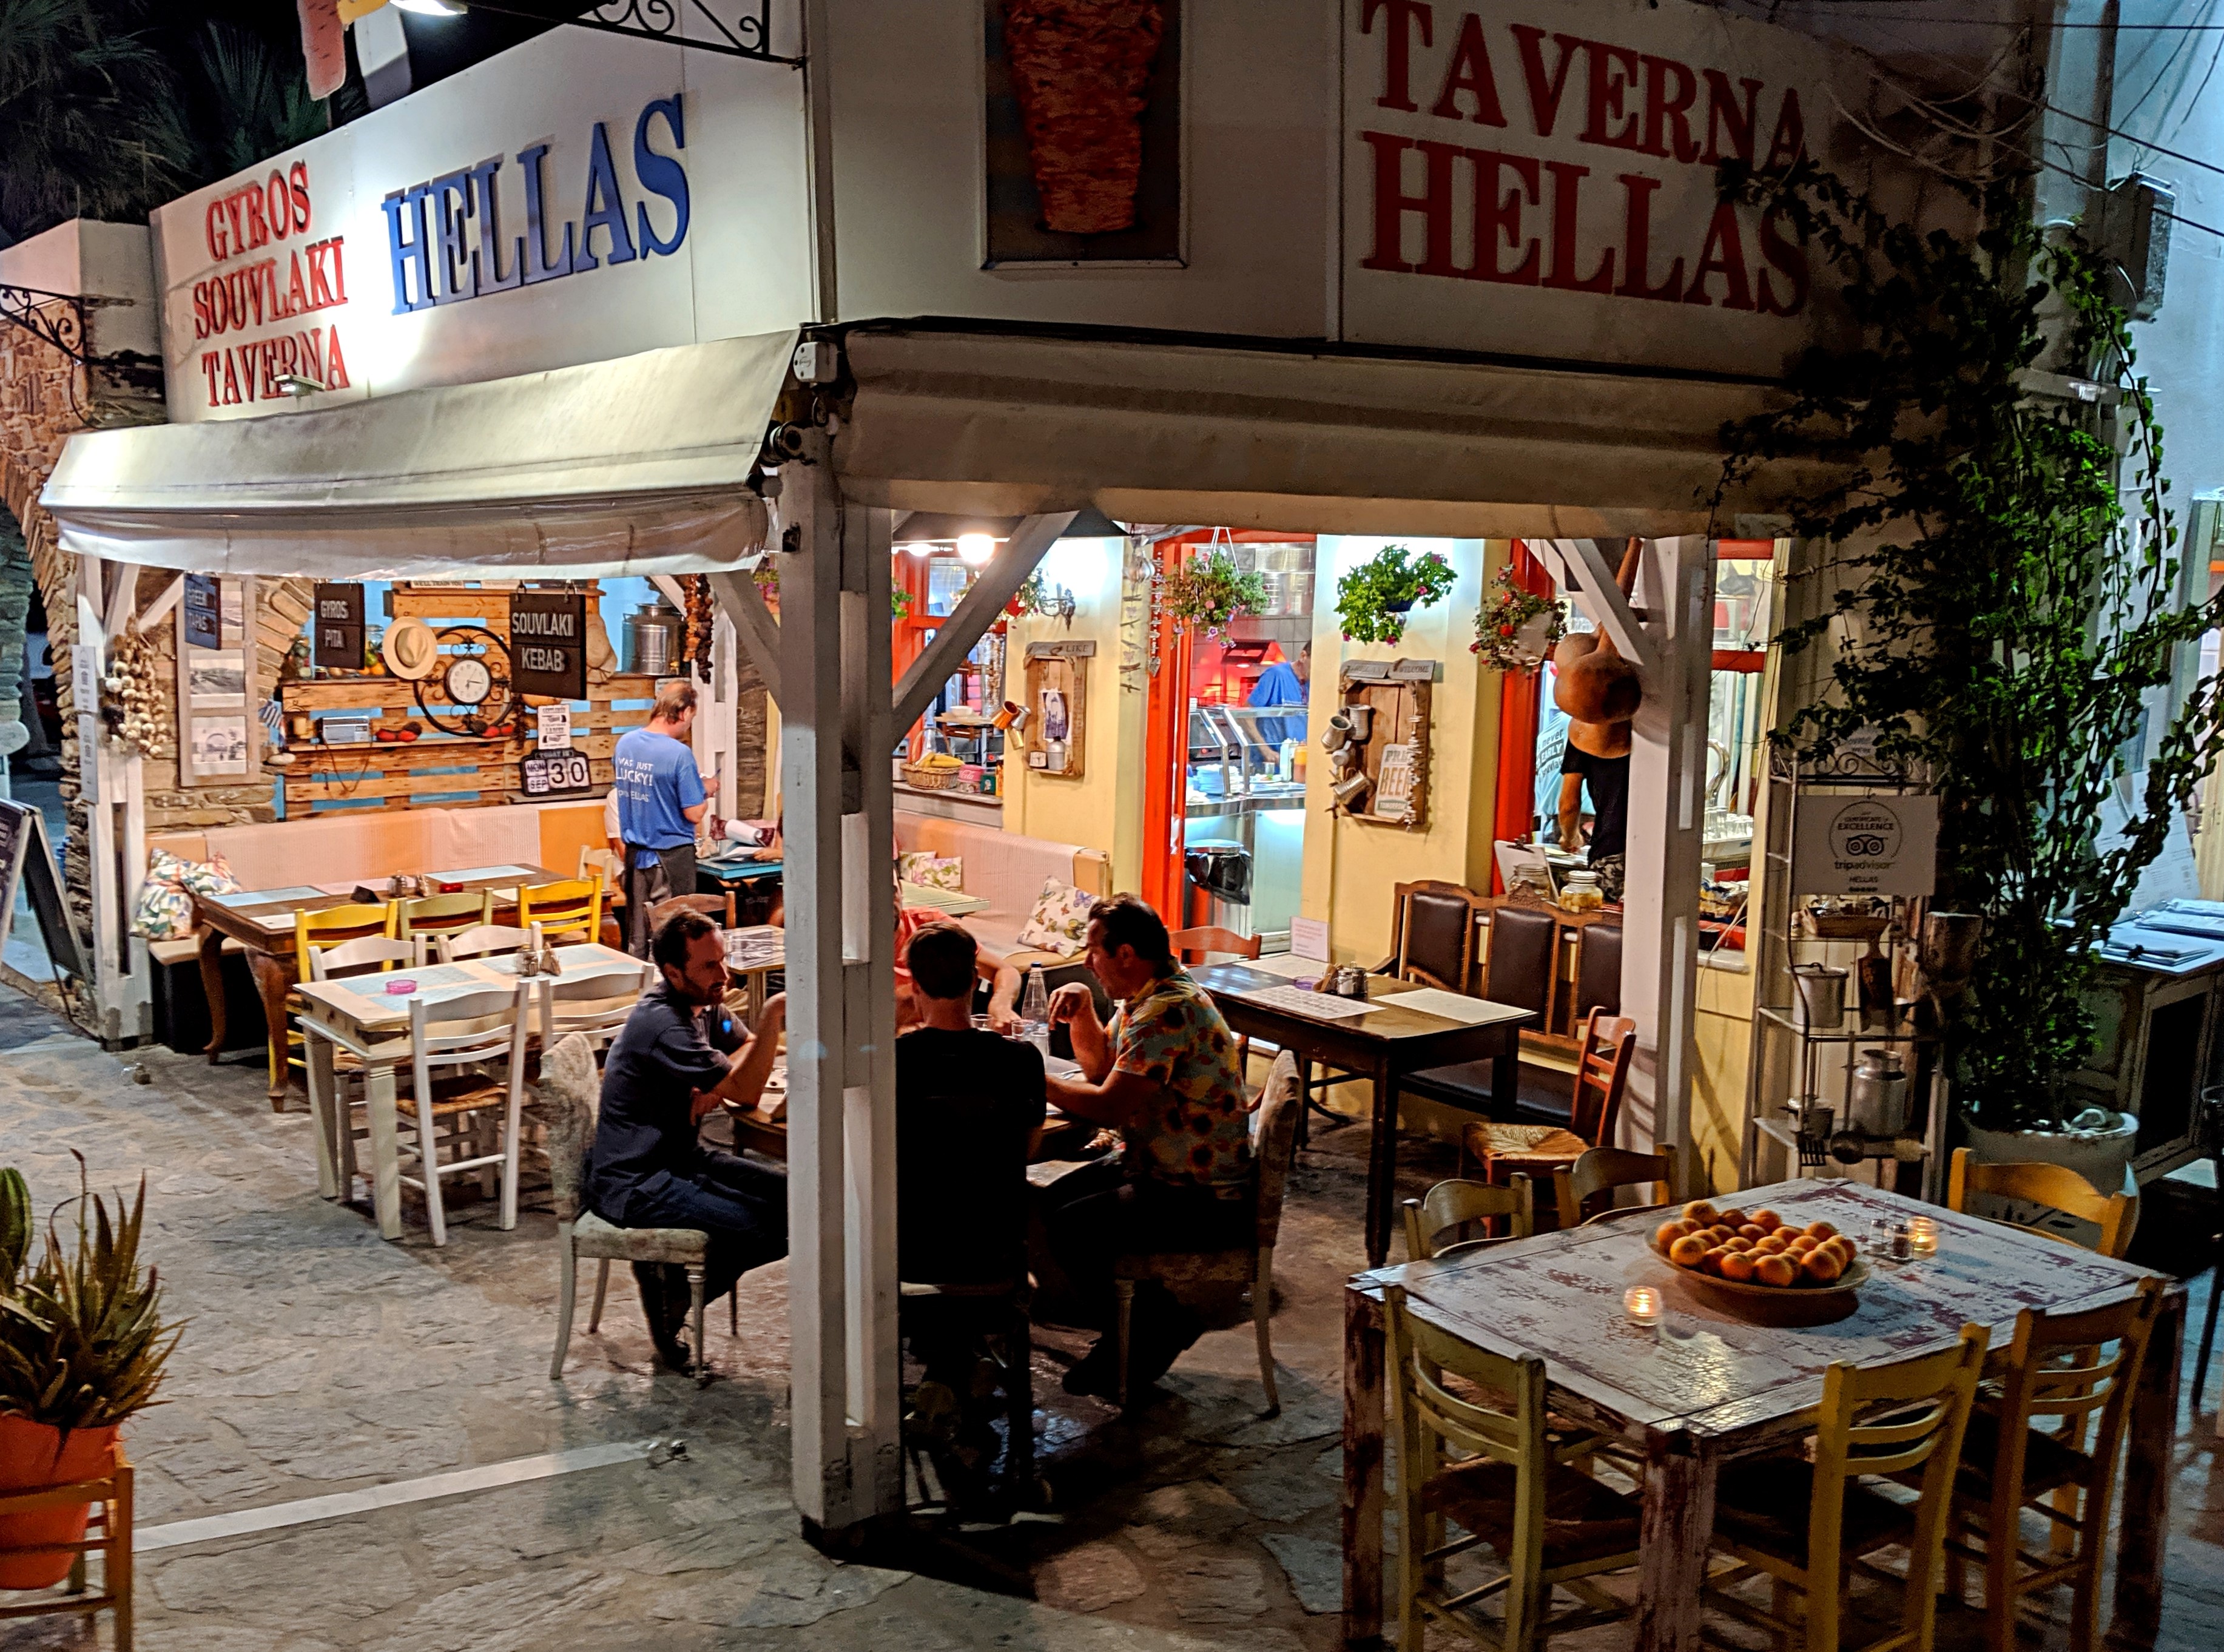 Hellas restaurant outside seating